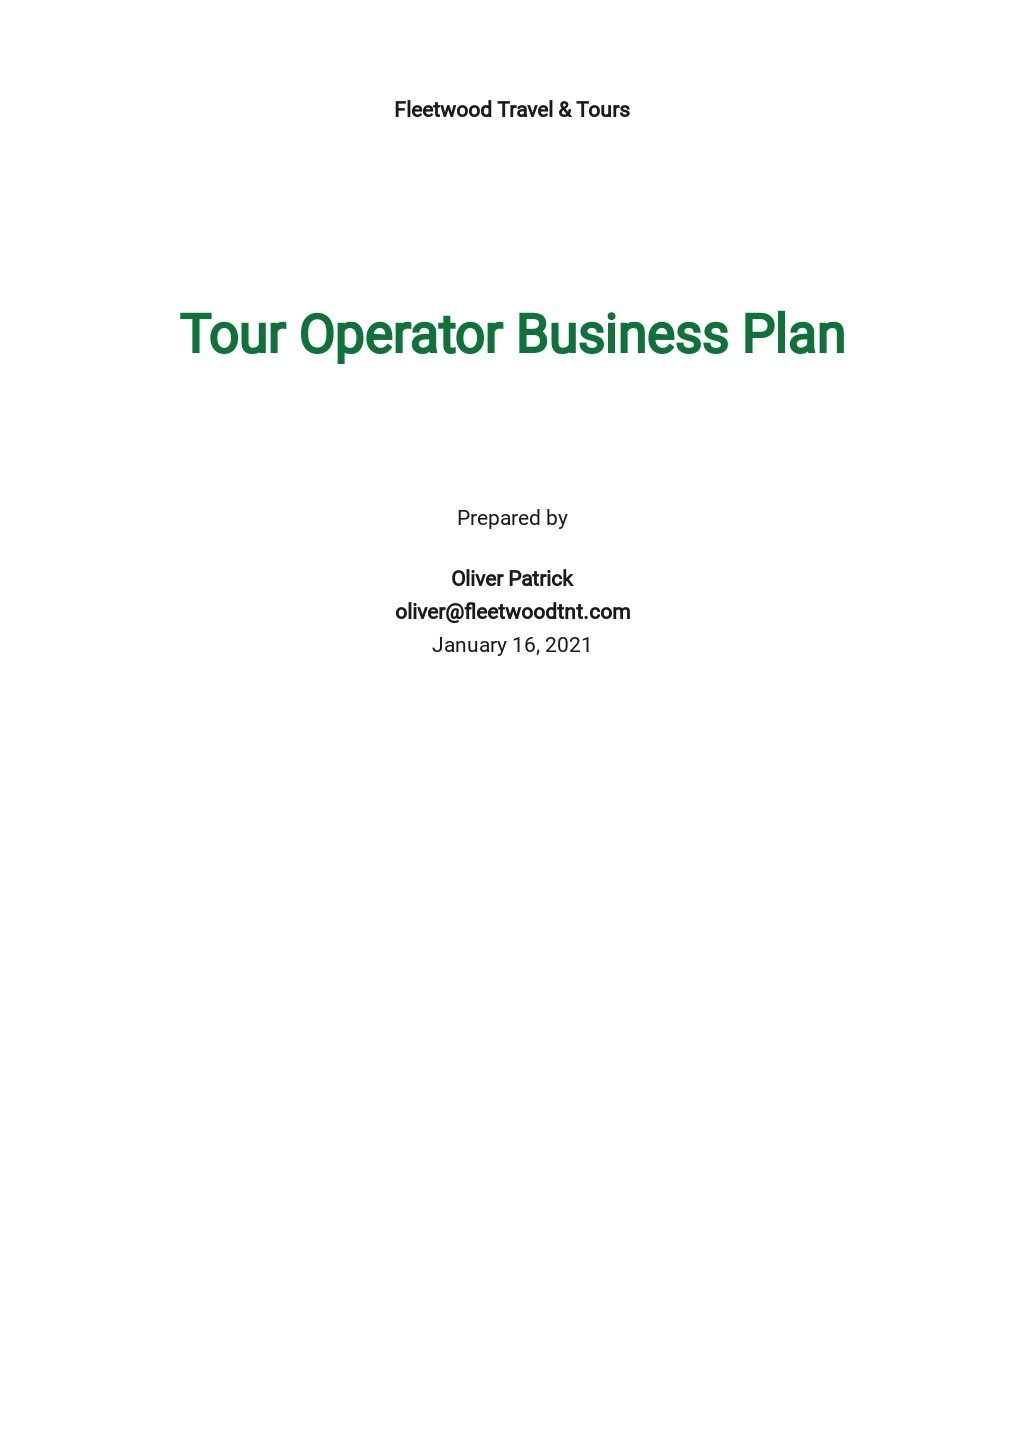 sample tour operator business plan pdf